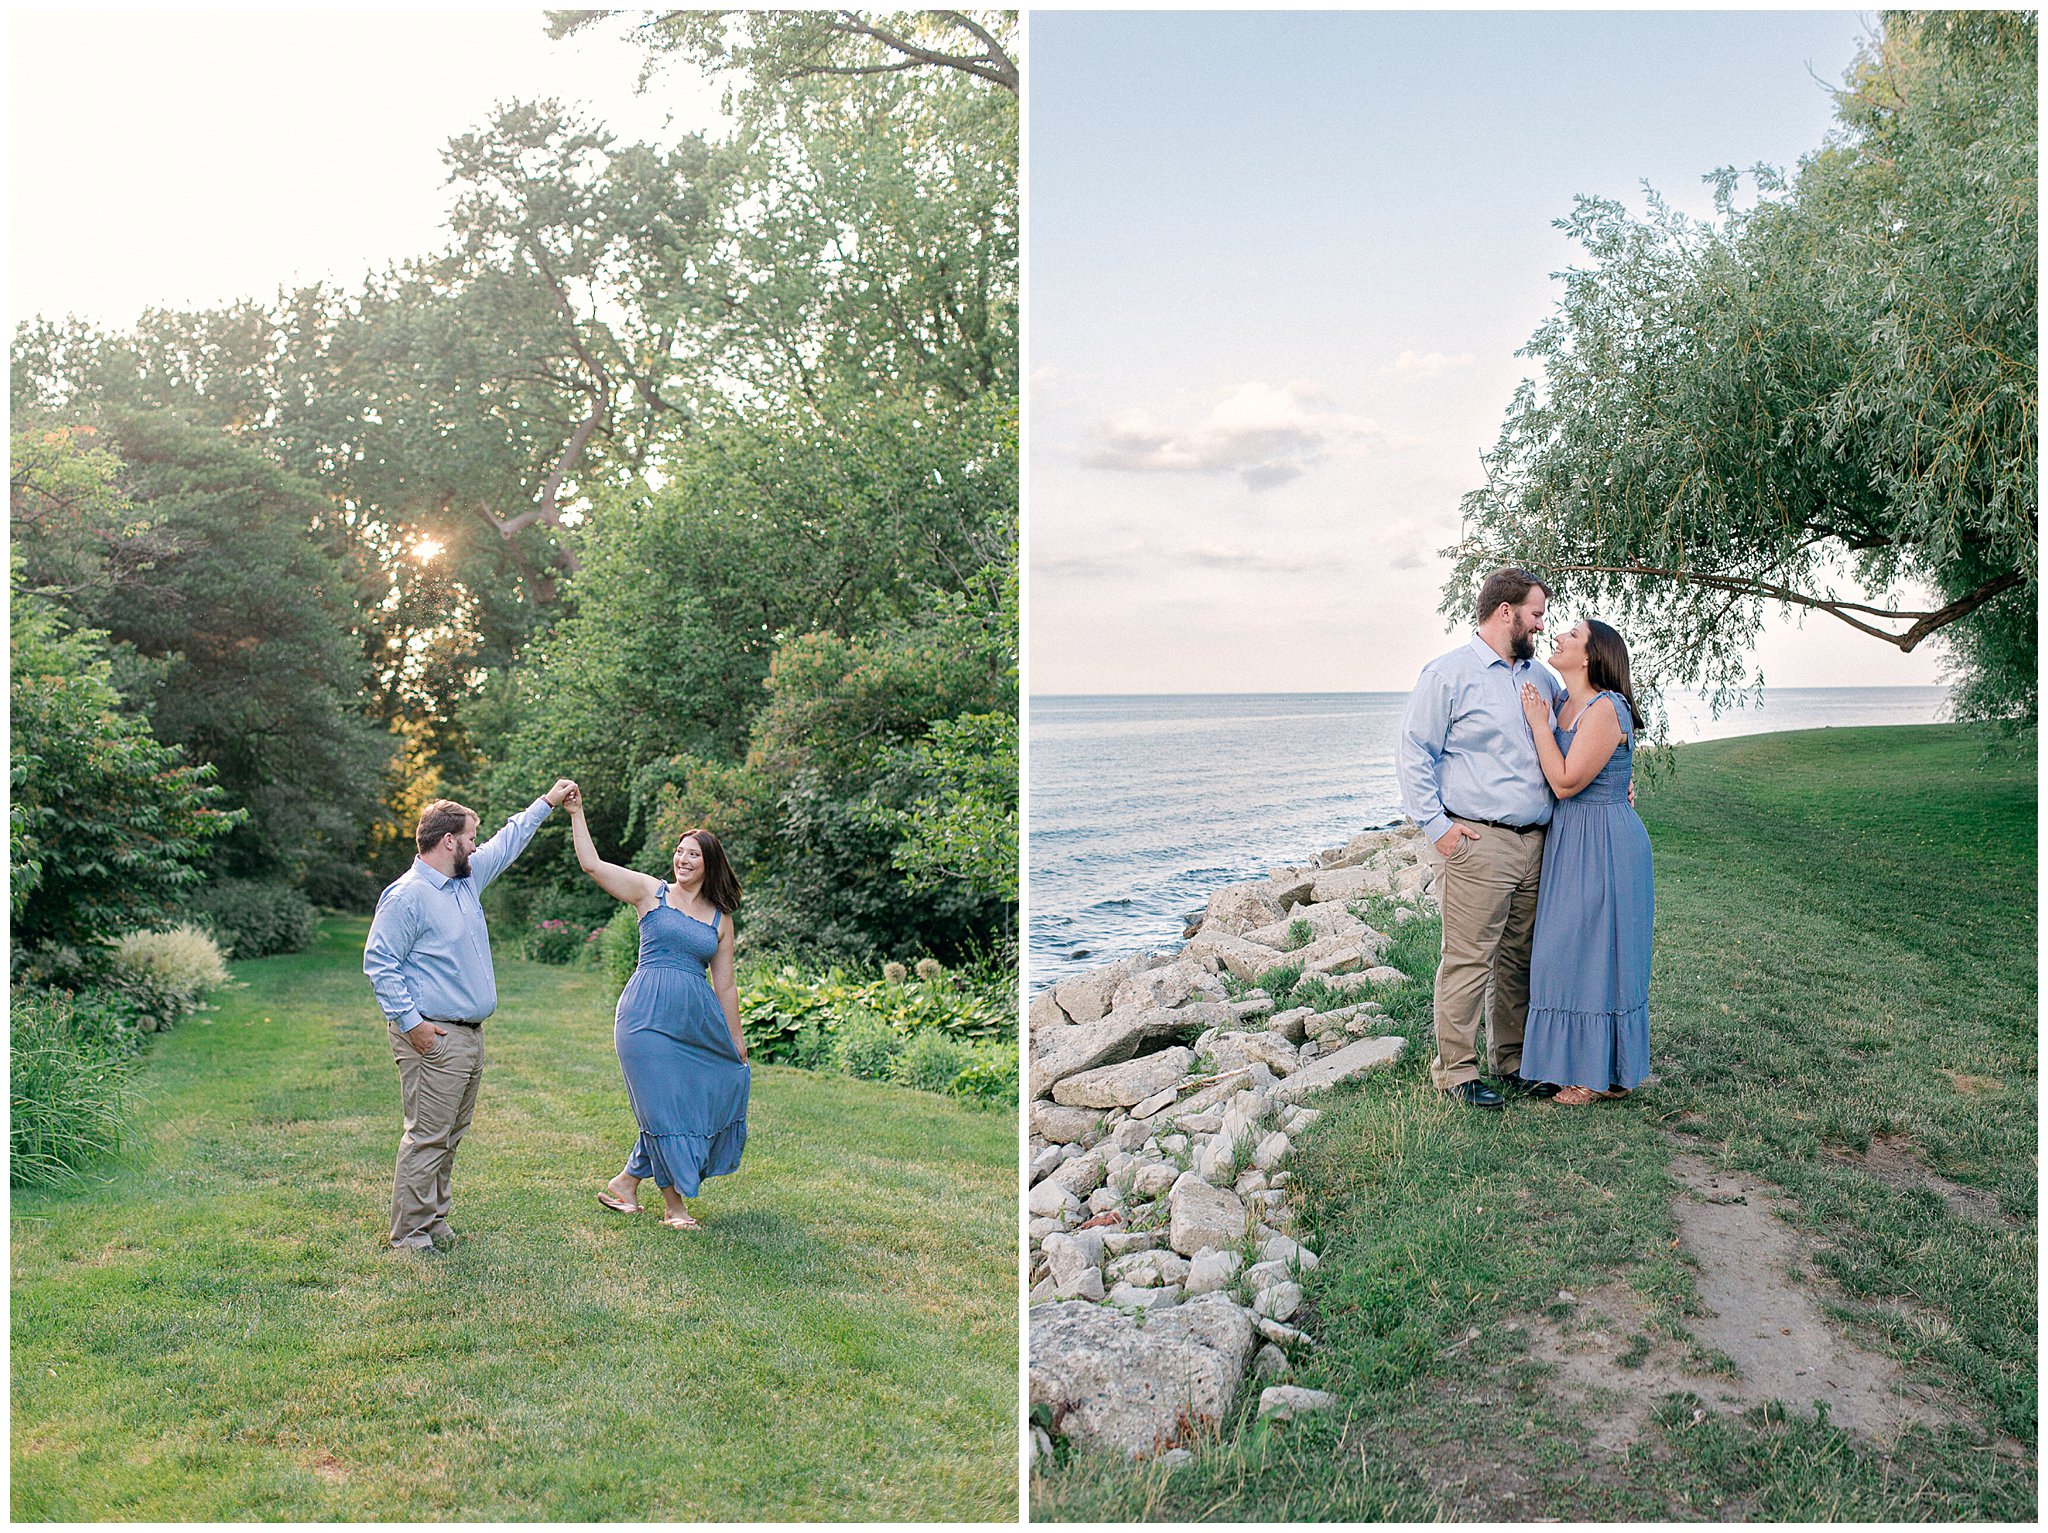 Summer-sunset-Engagement-photos-grosse-pointe-Michigan-Photographer